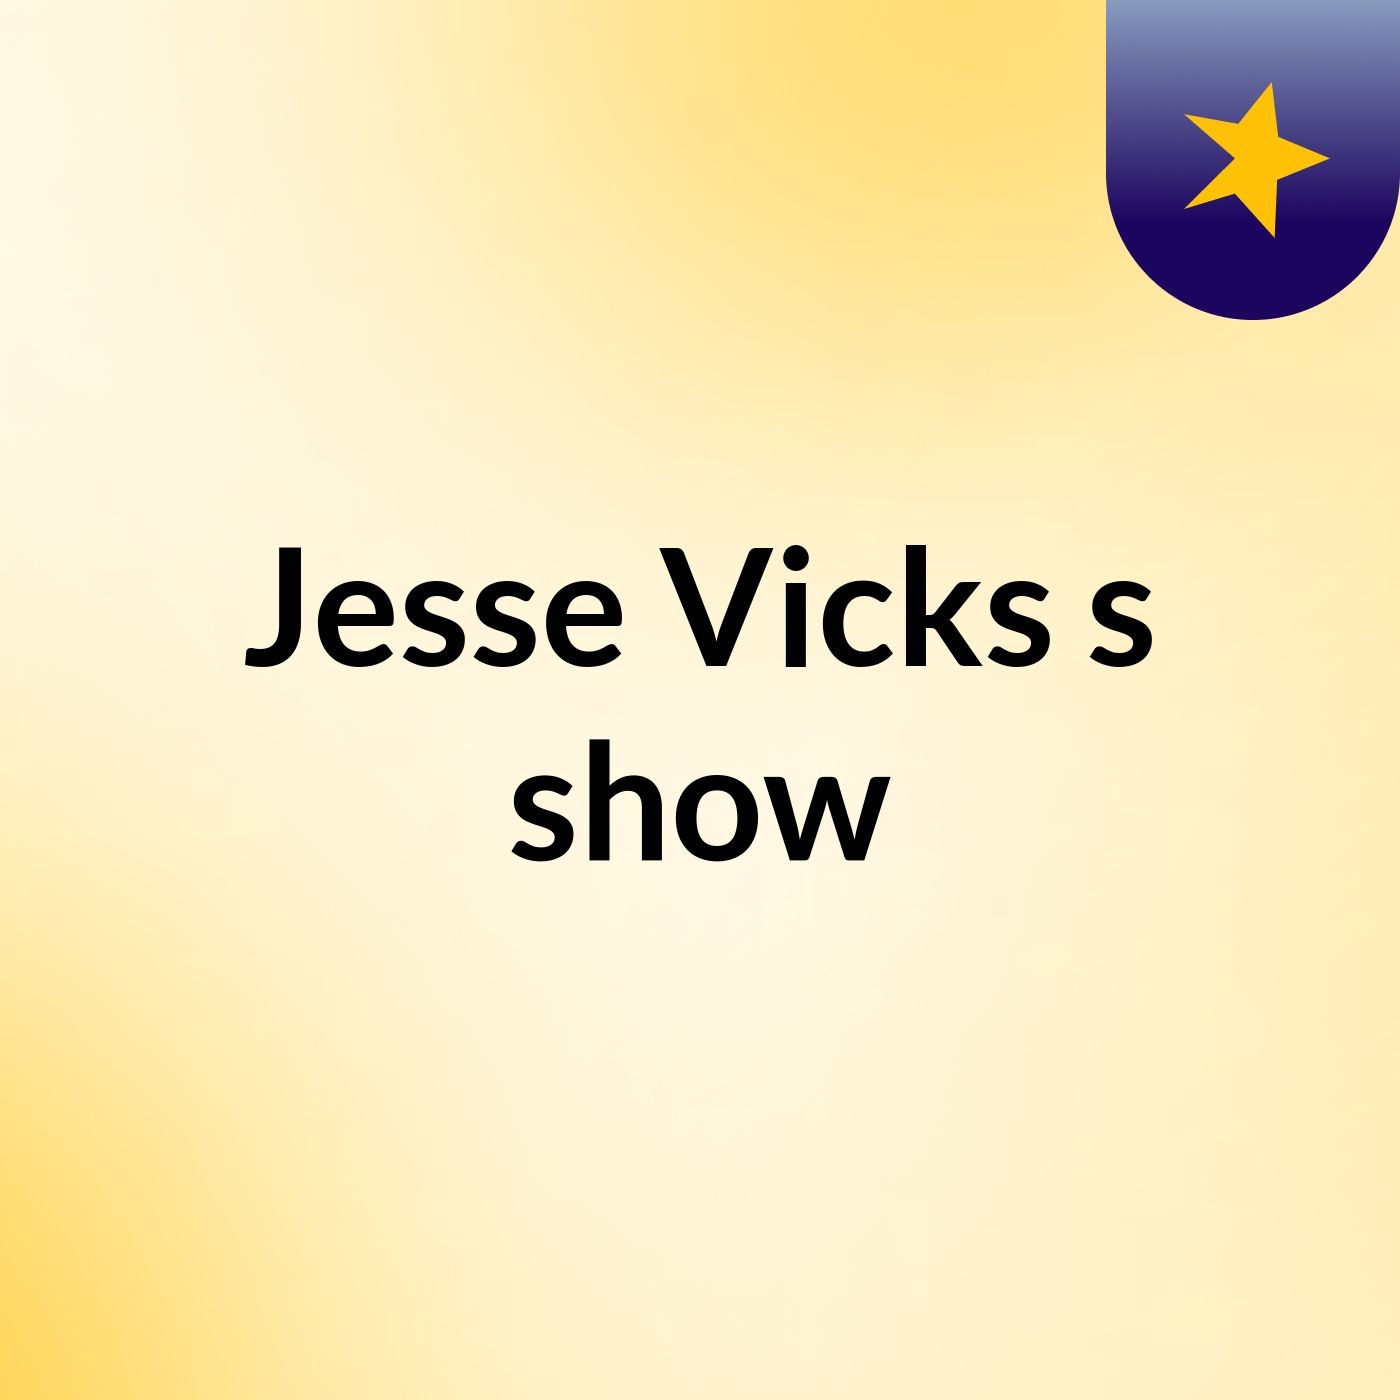 Episode 2 - Jesse Vicks's show